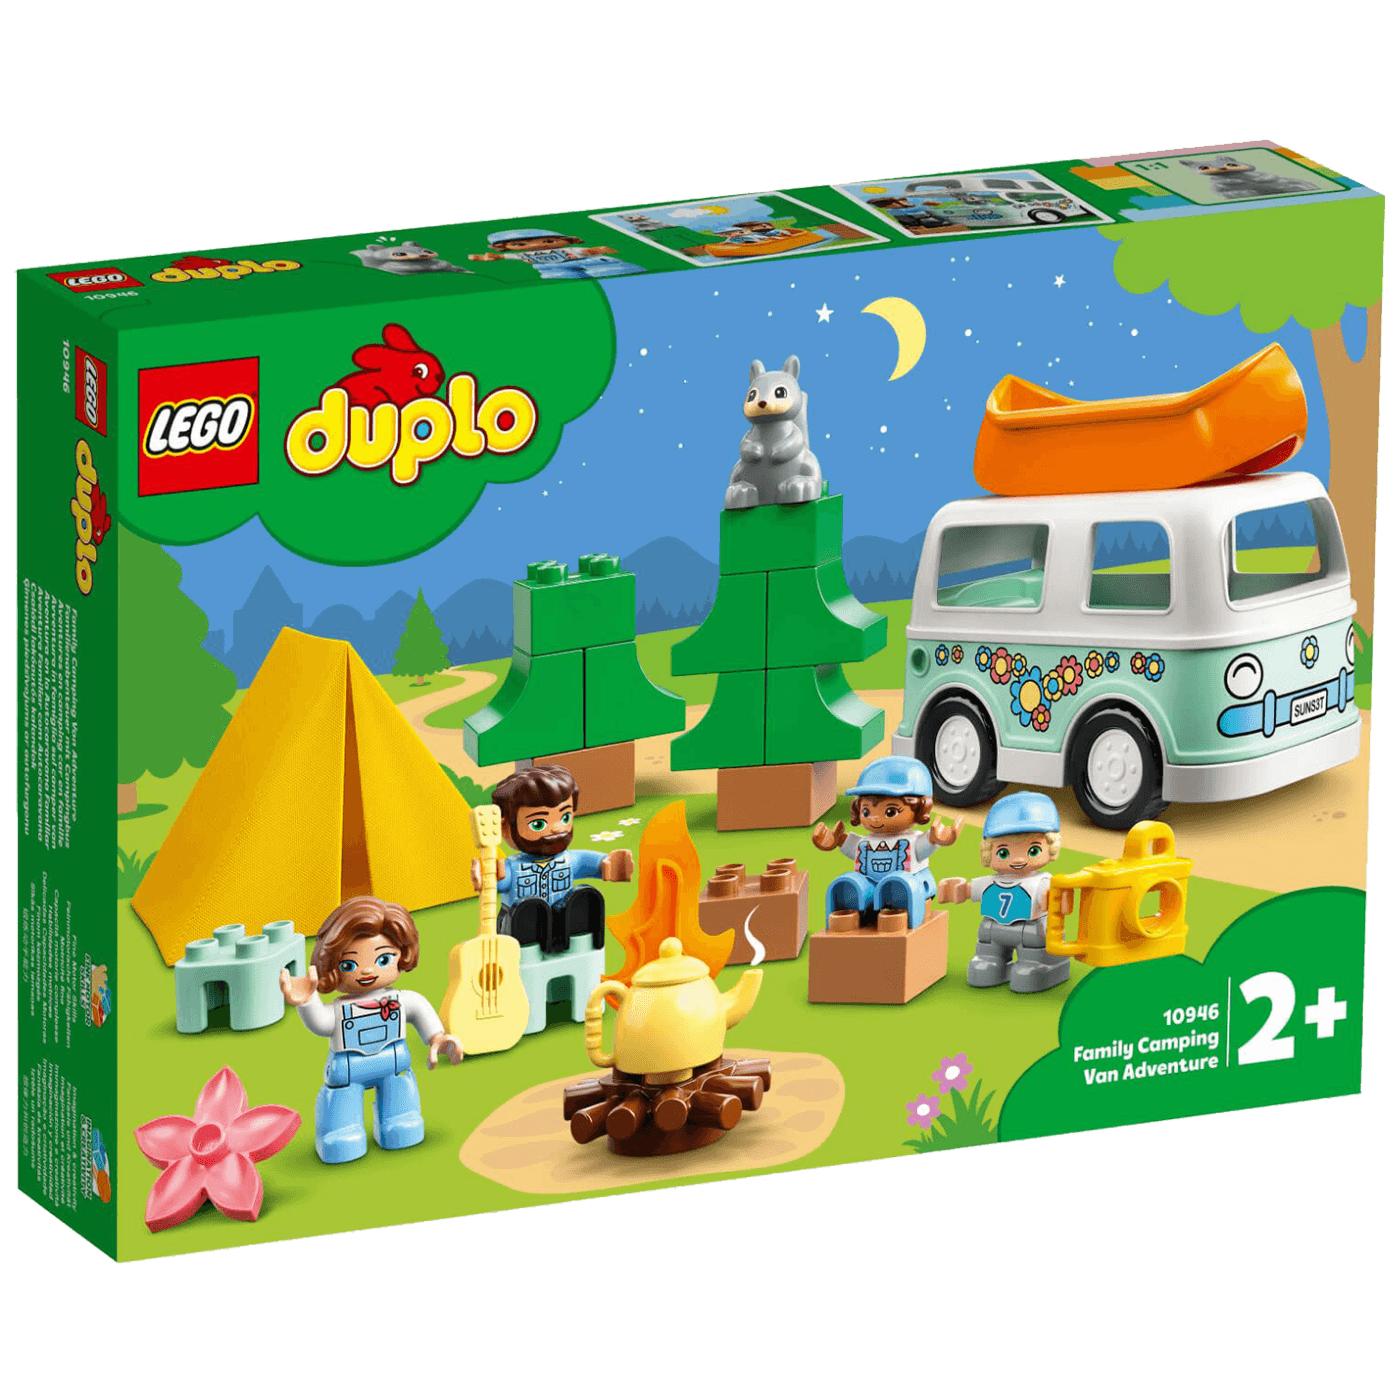 Porodično kampovanje, LEGO Duplo